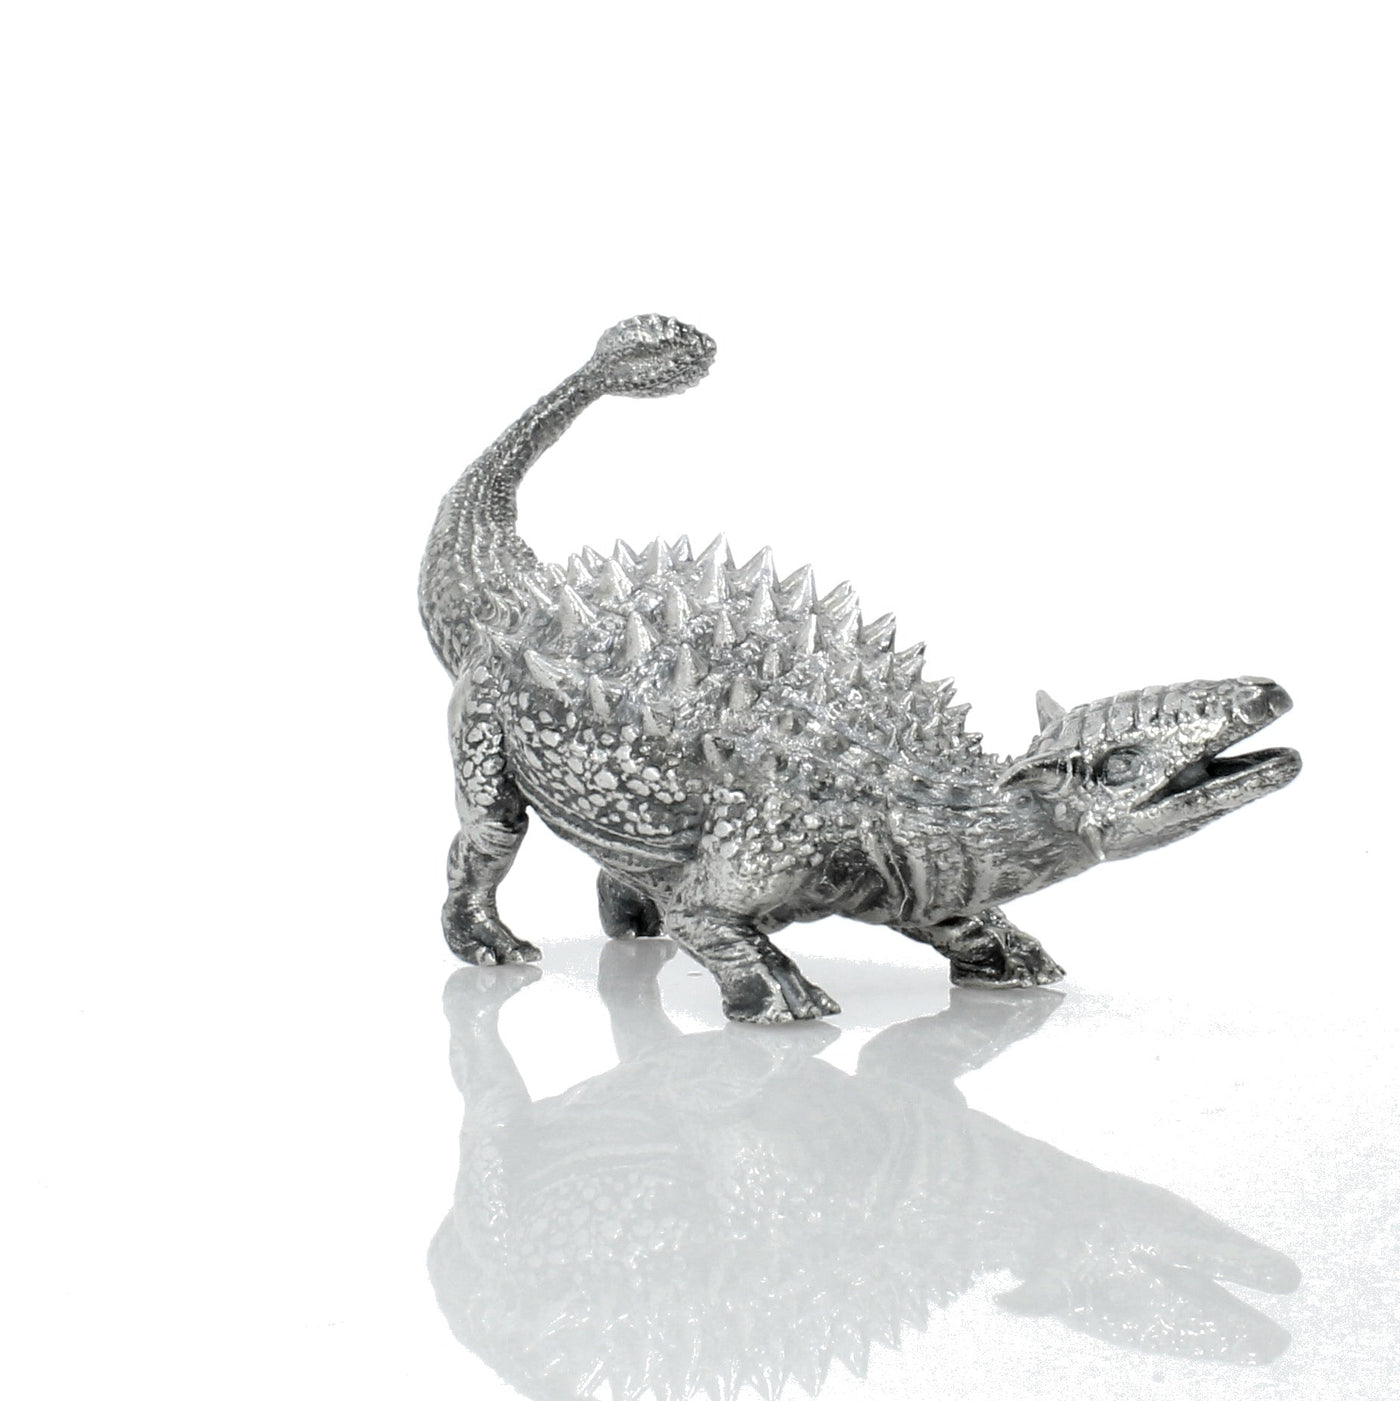 Ankylosaurus - SilverStatues.com